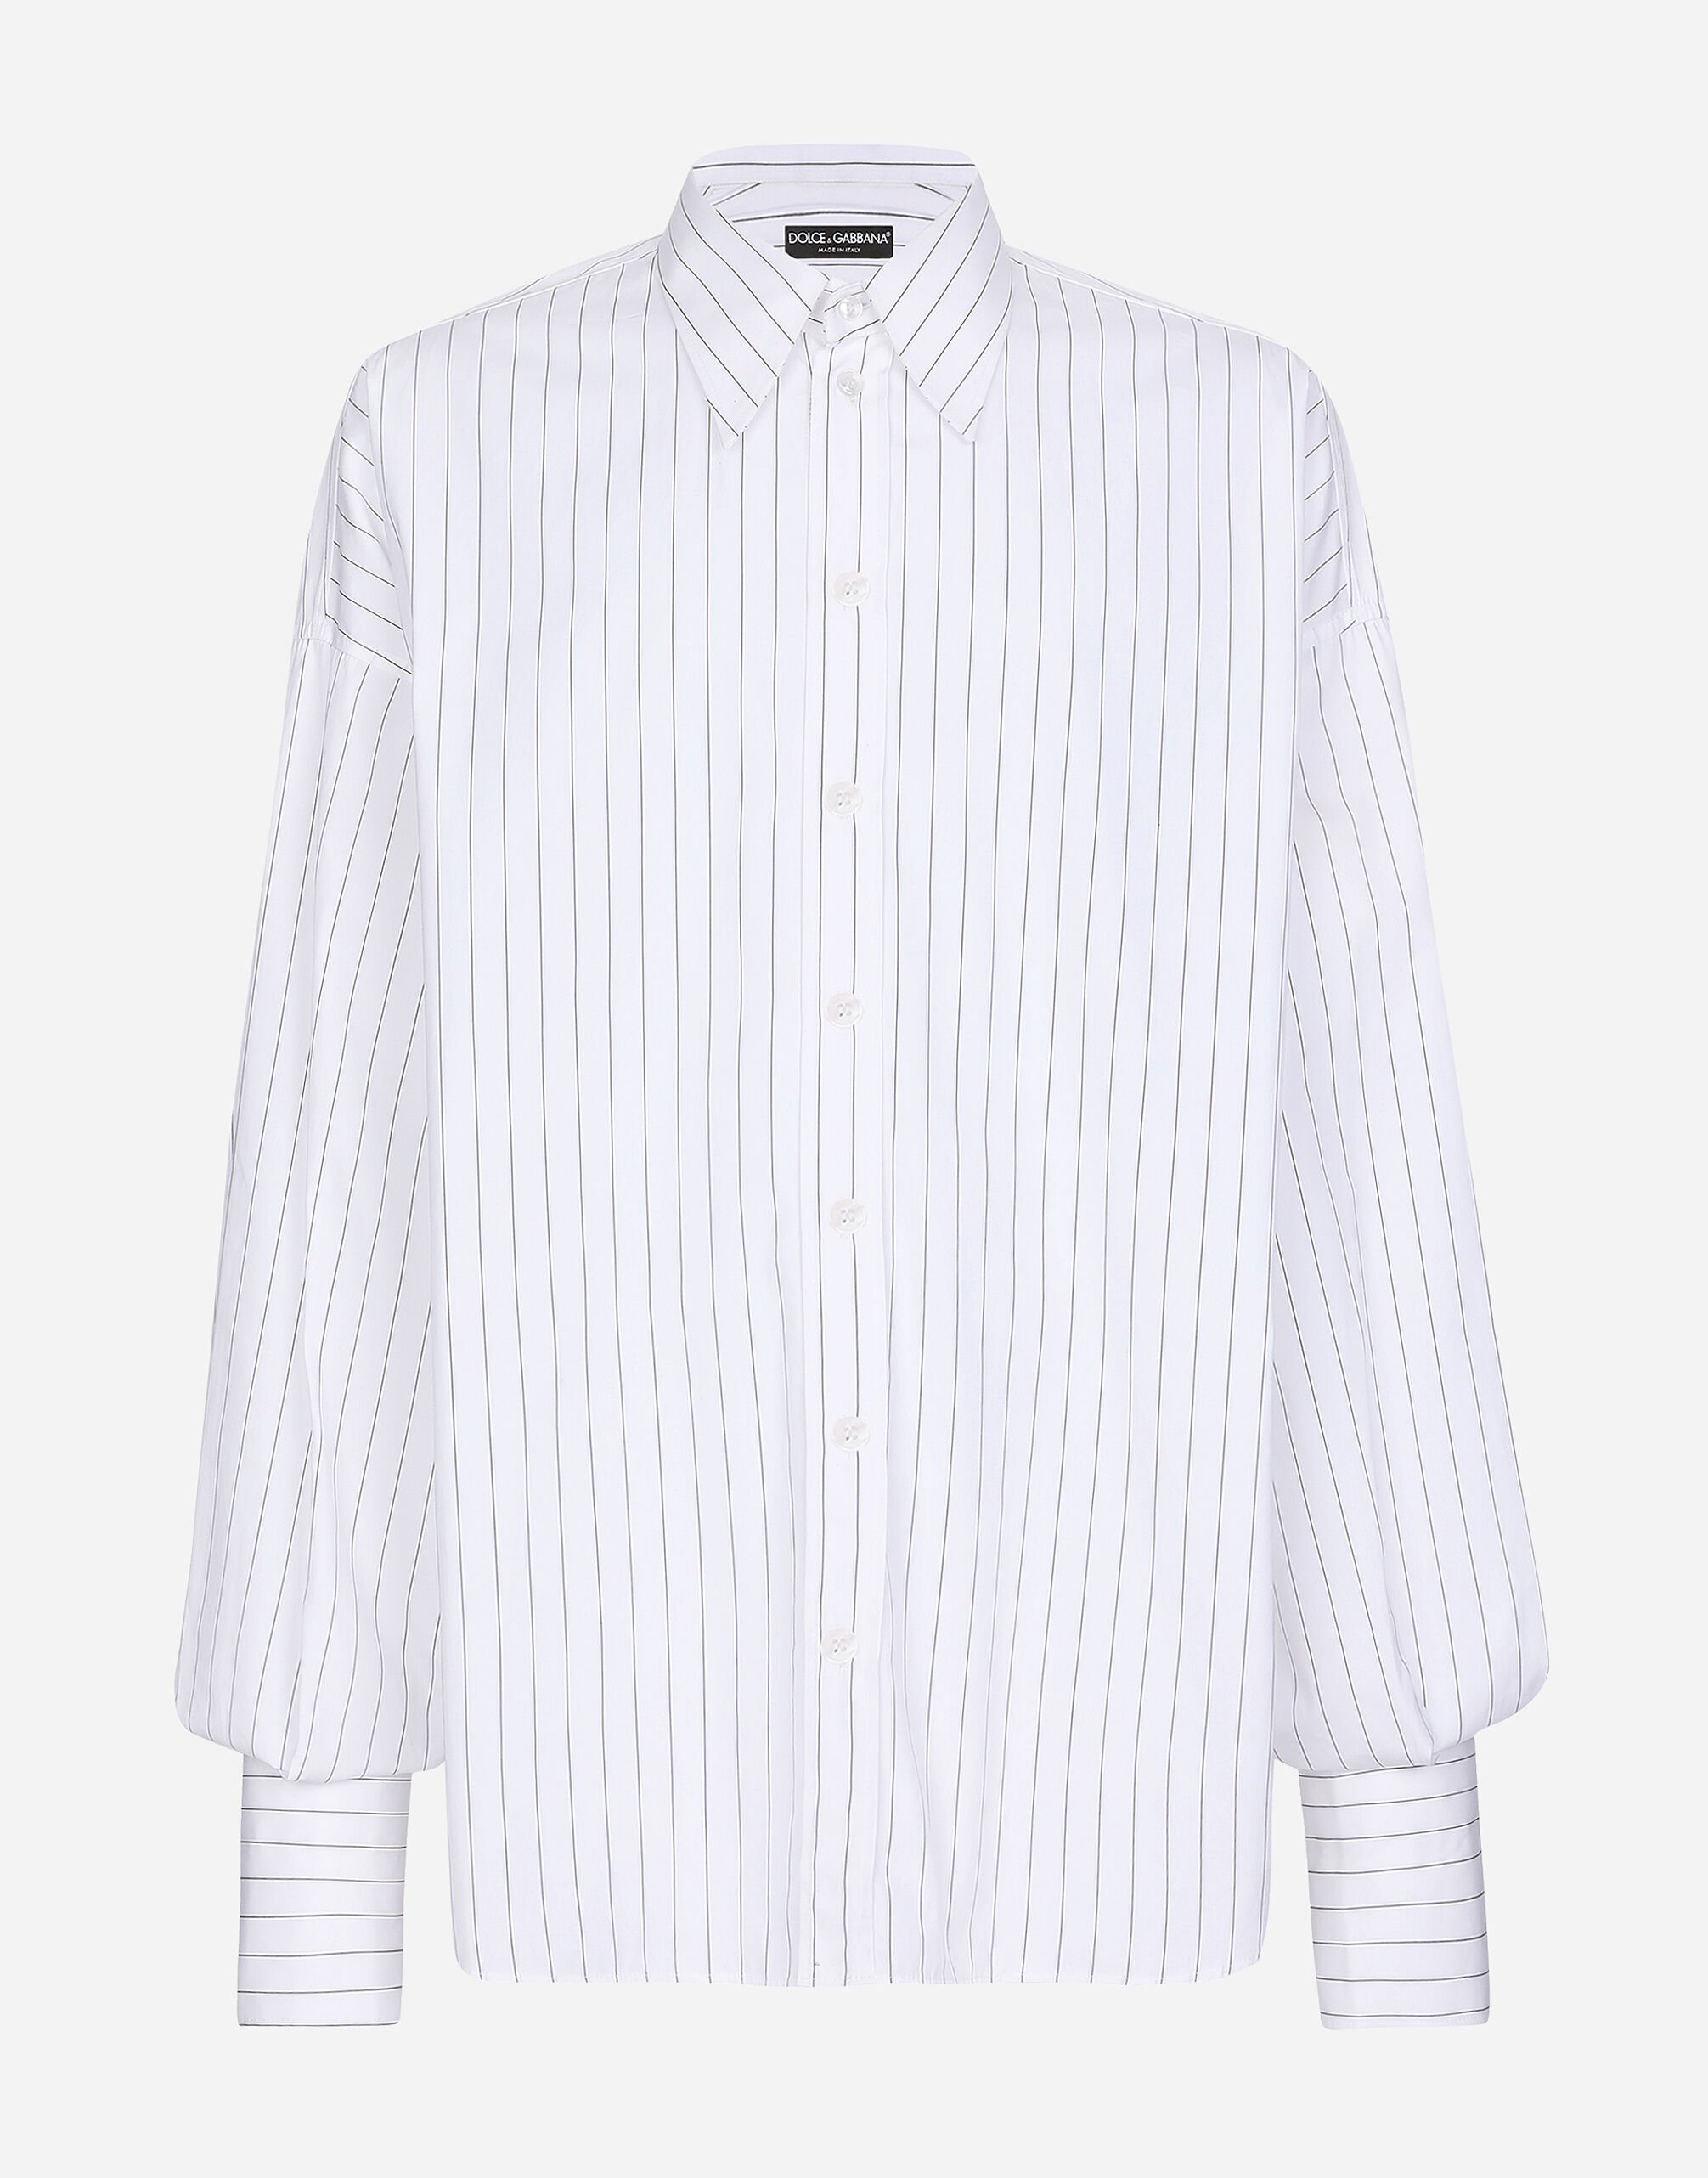 Dolce&Gabbana Super-oversize striped poplin shirt Black G8PL4TG7F2H